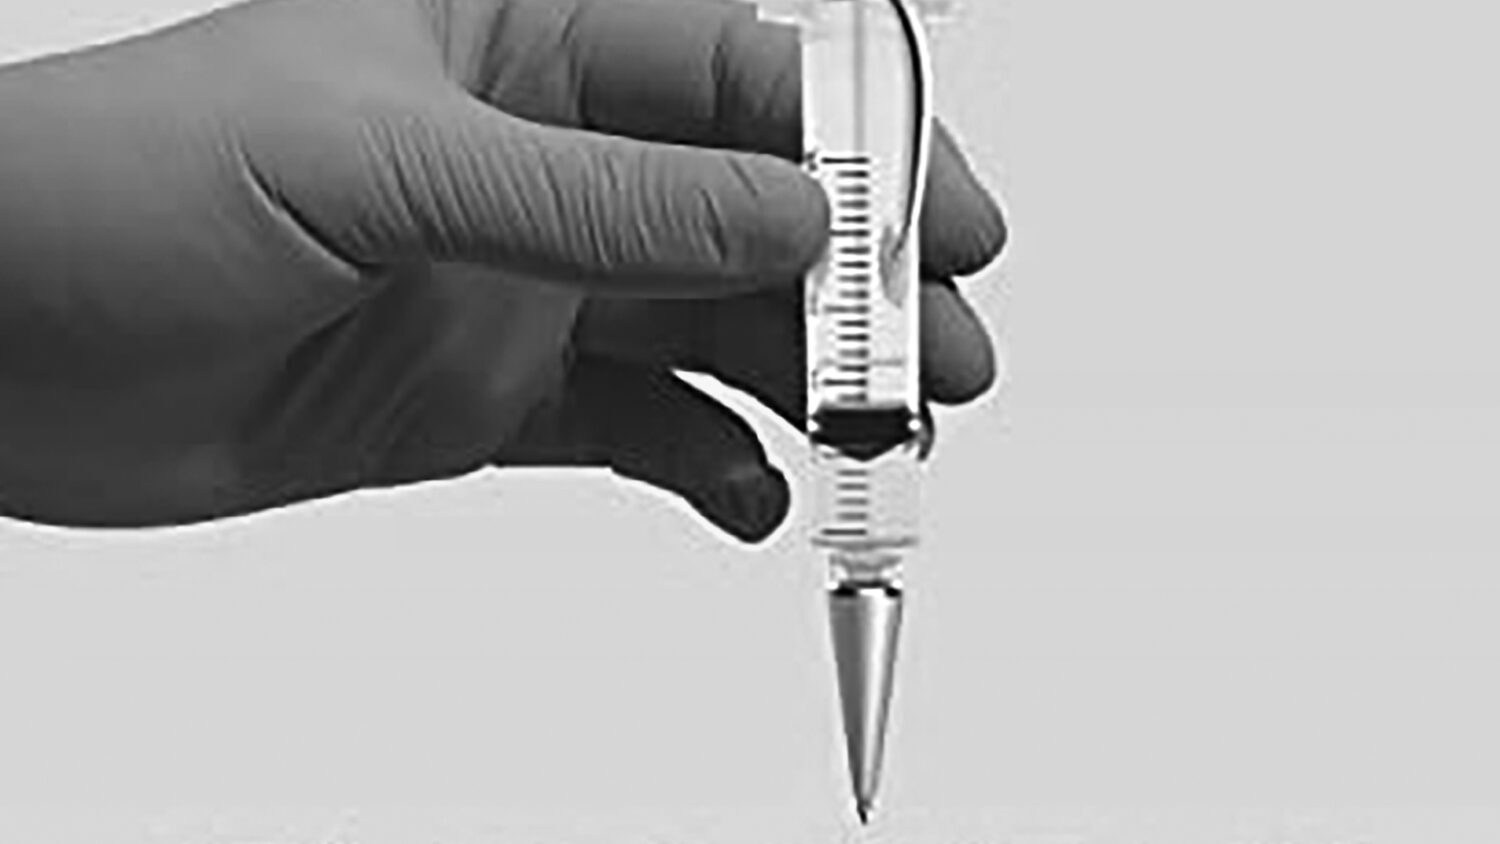 Gloved hand holds syringe vertically